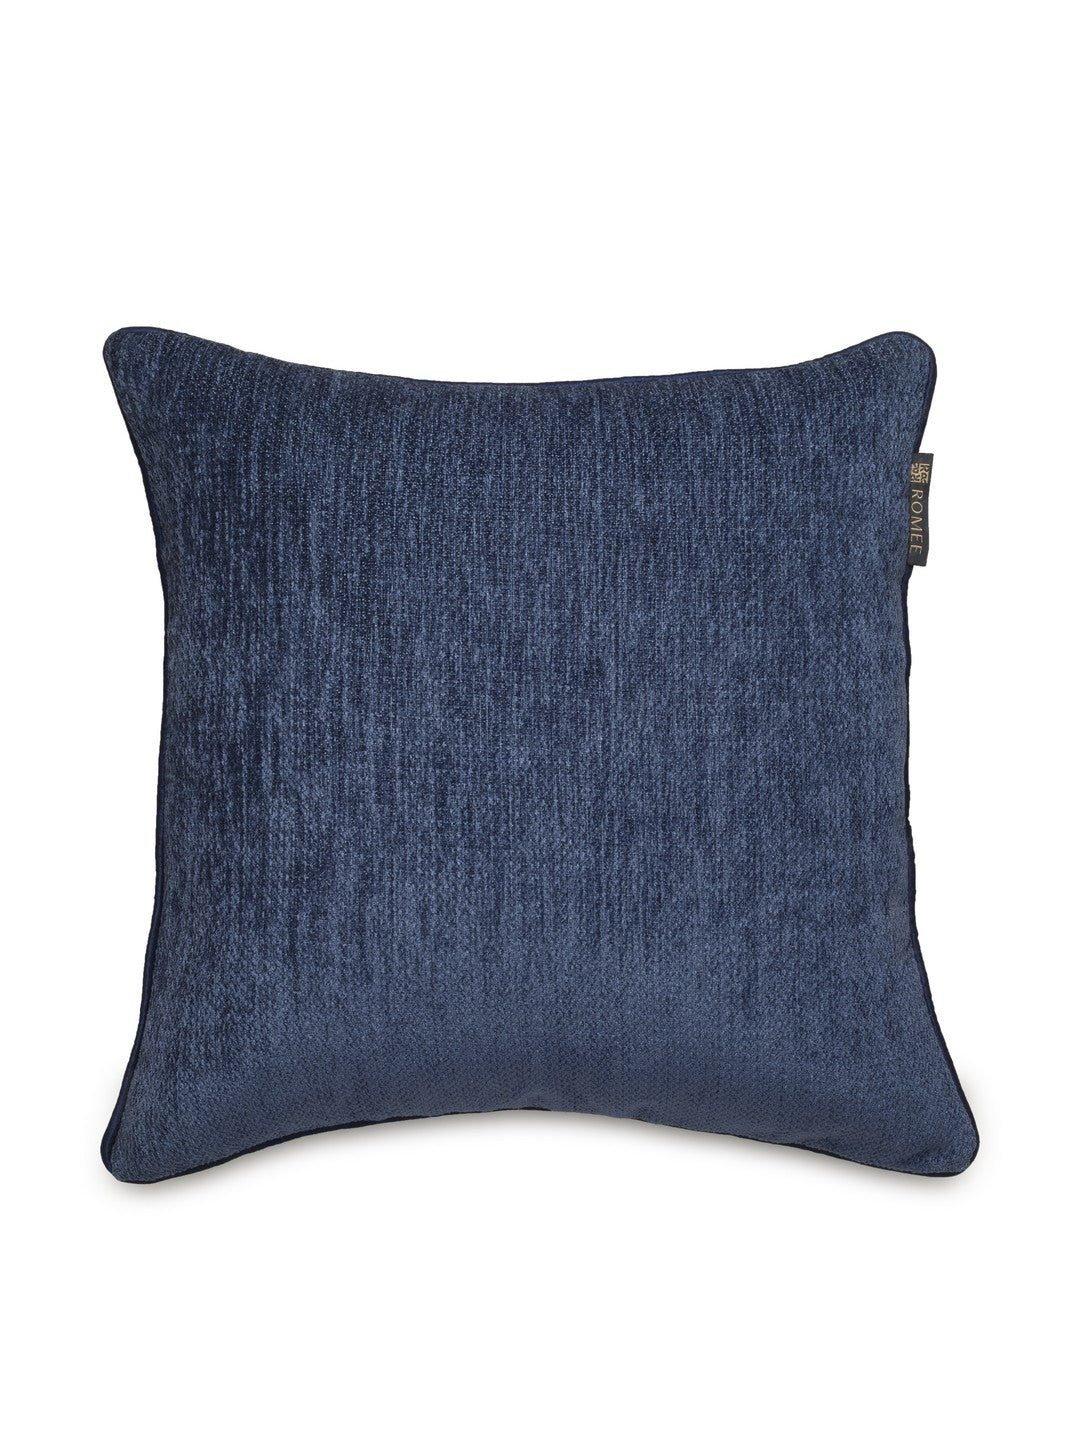 Soft Chenille Fabric Albert Plain Cushion Covers 16 inch x 16 inch, Set of 5 - Blue